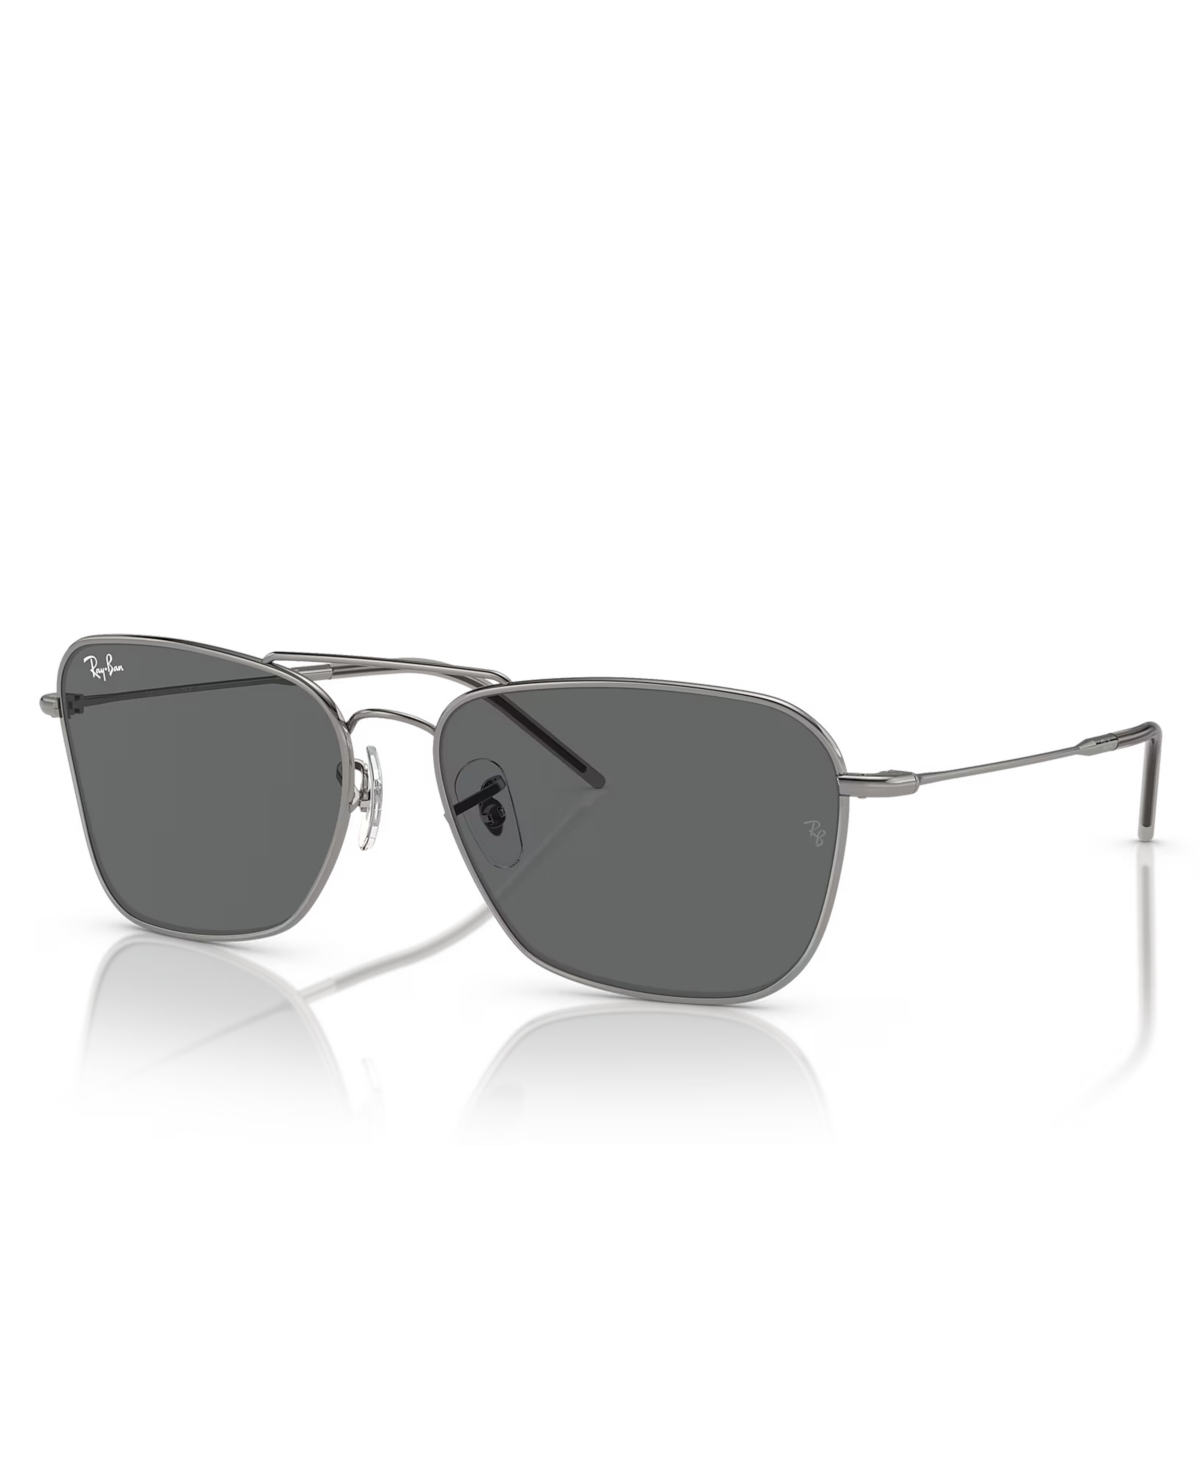 Ray Ban Sunglasses Unisex Caravan Reverse - Gunmetal Frame Grey Lenses 58-15